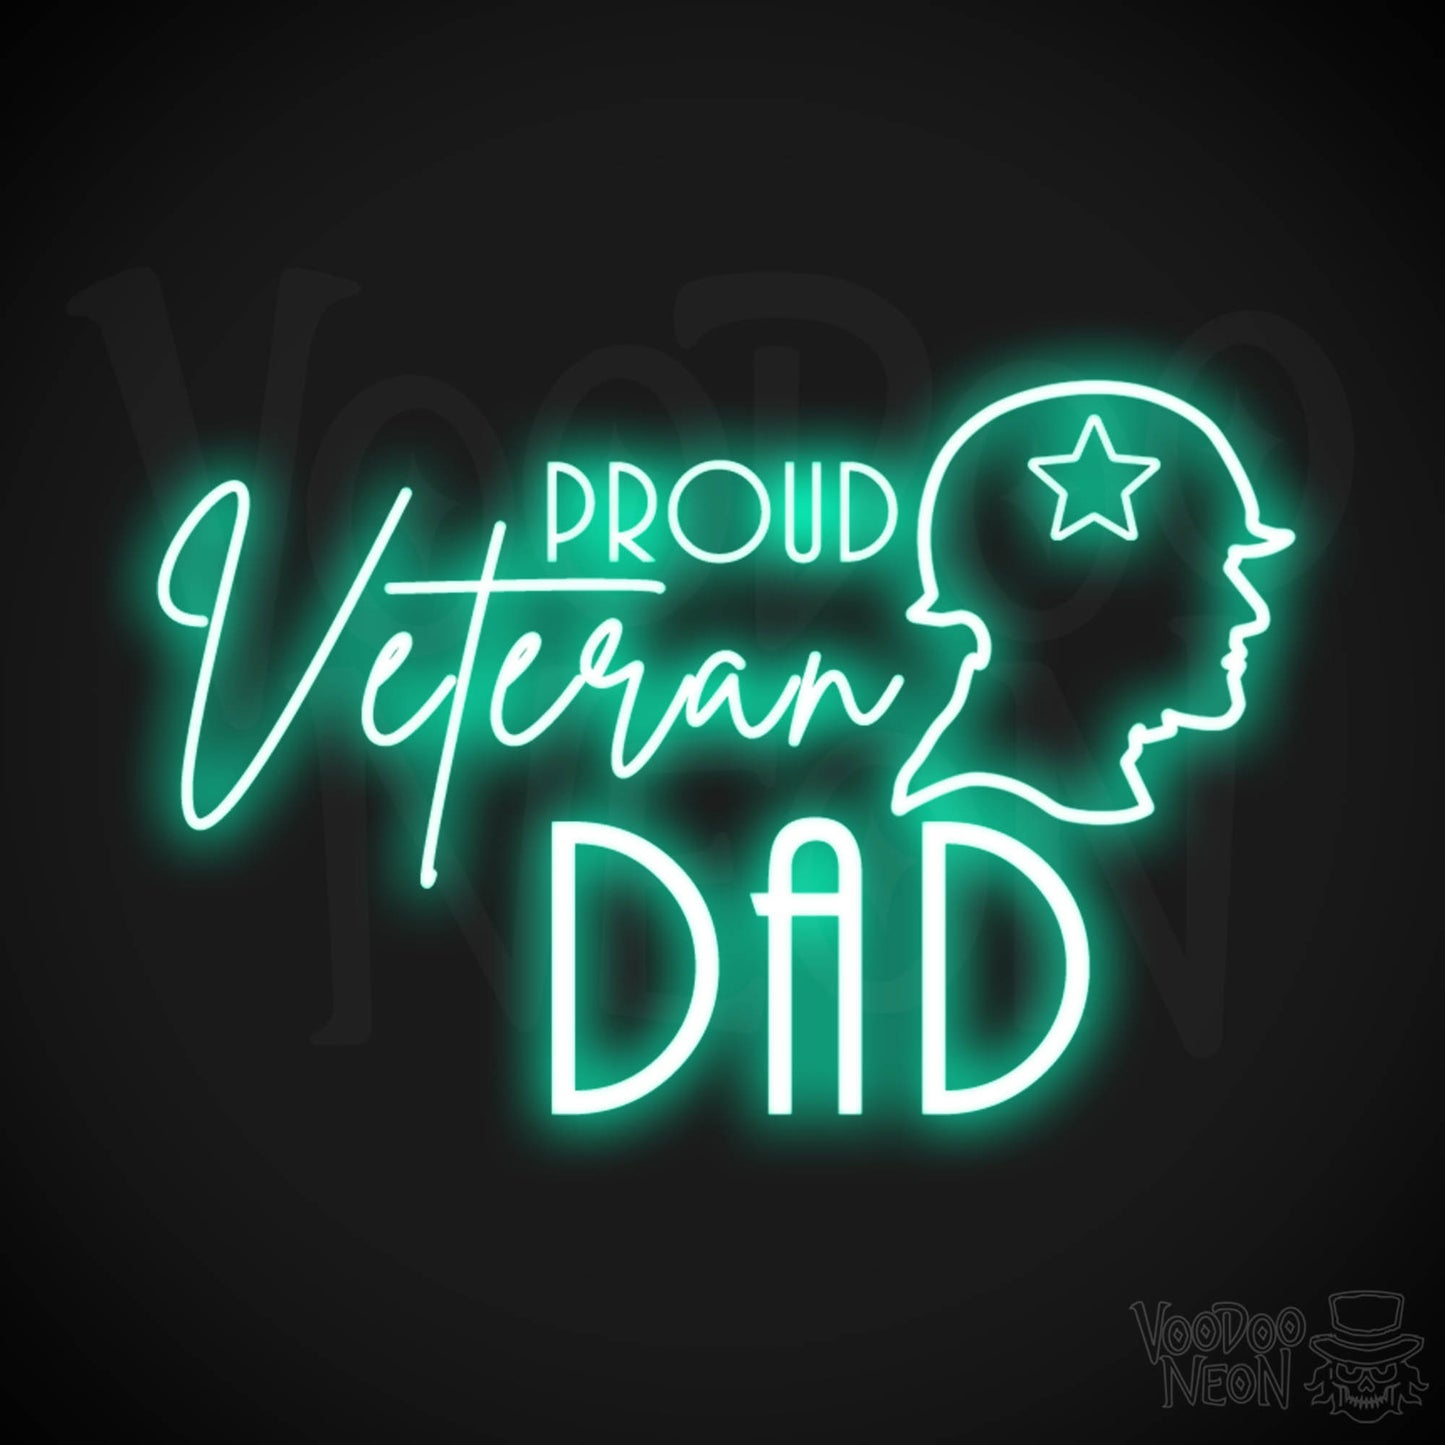 Proud Veteran Dad Neon Sign - Proud Veteran Dad Sign - Neon Veteran Wall Art - Color Light Green